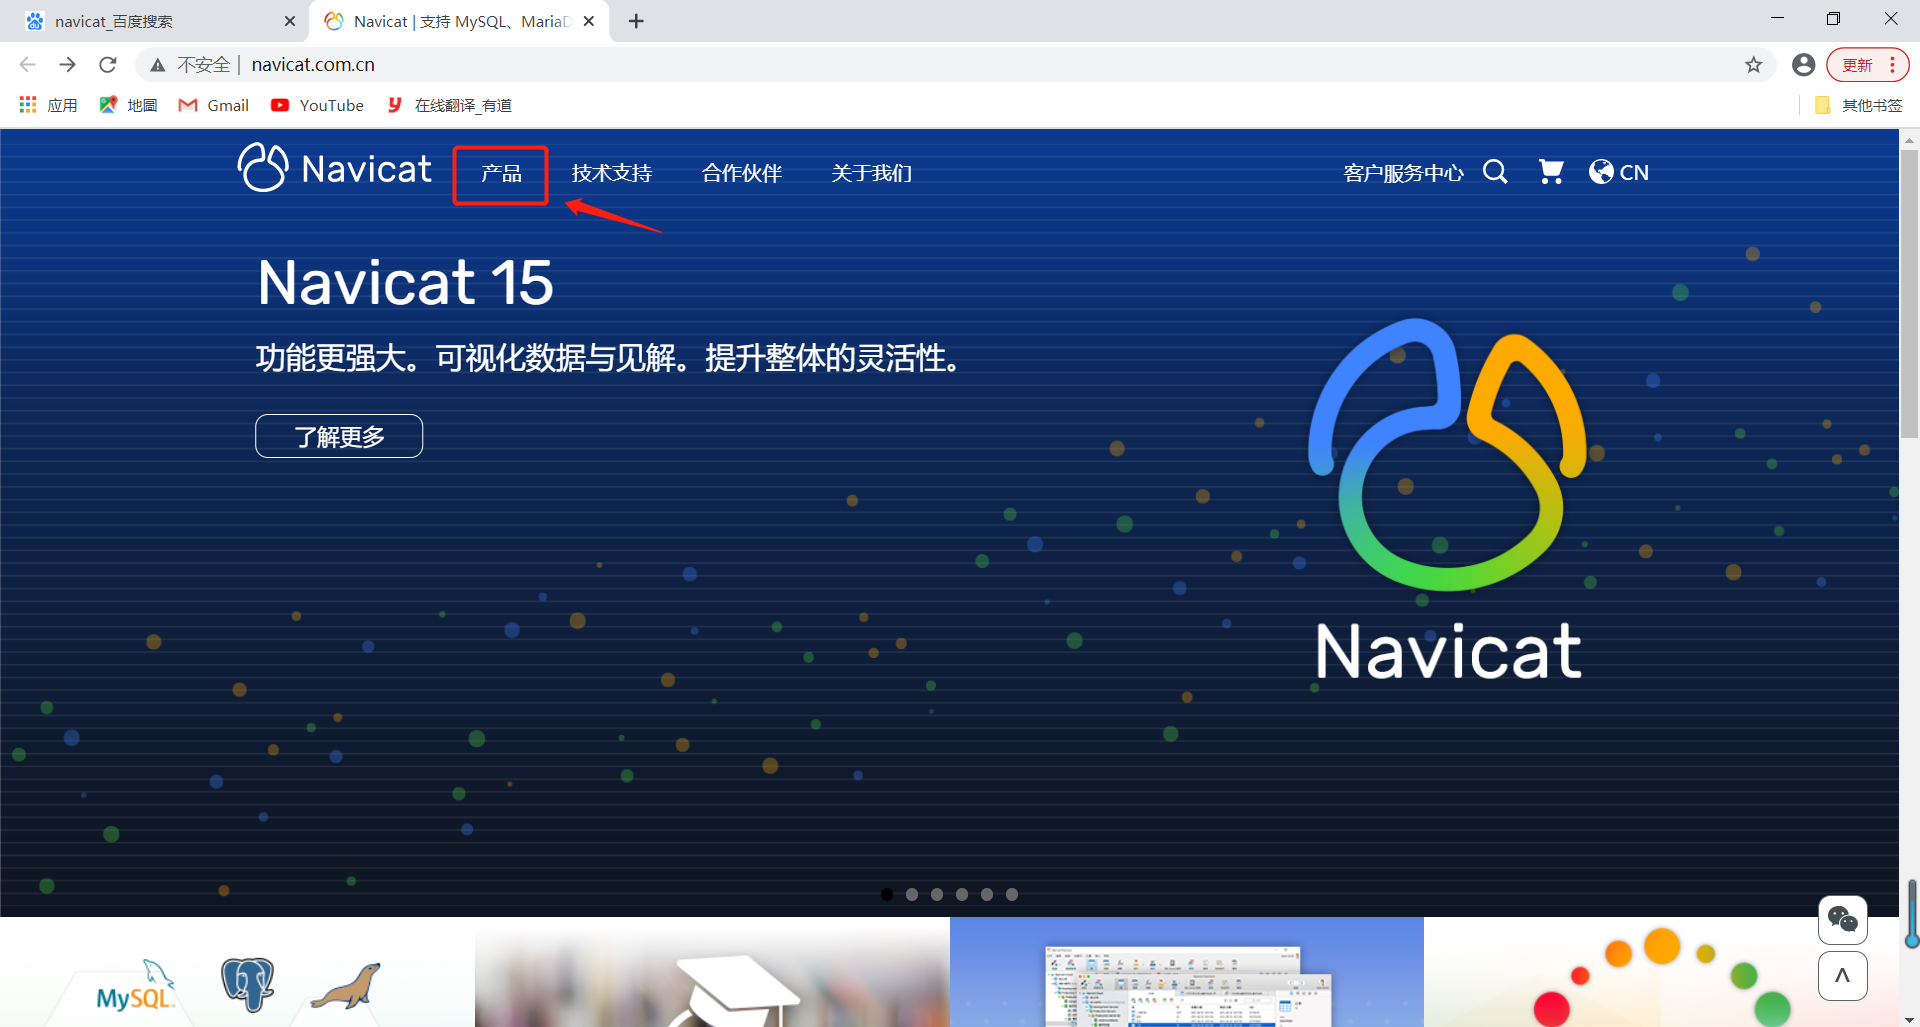 Navicat Premium 16.2.11 instal the new for windows